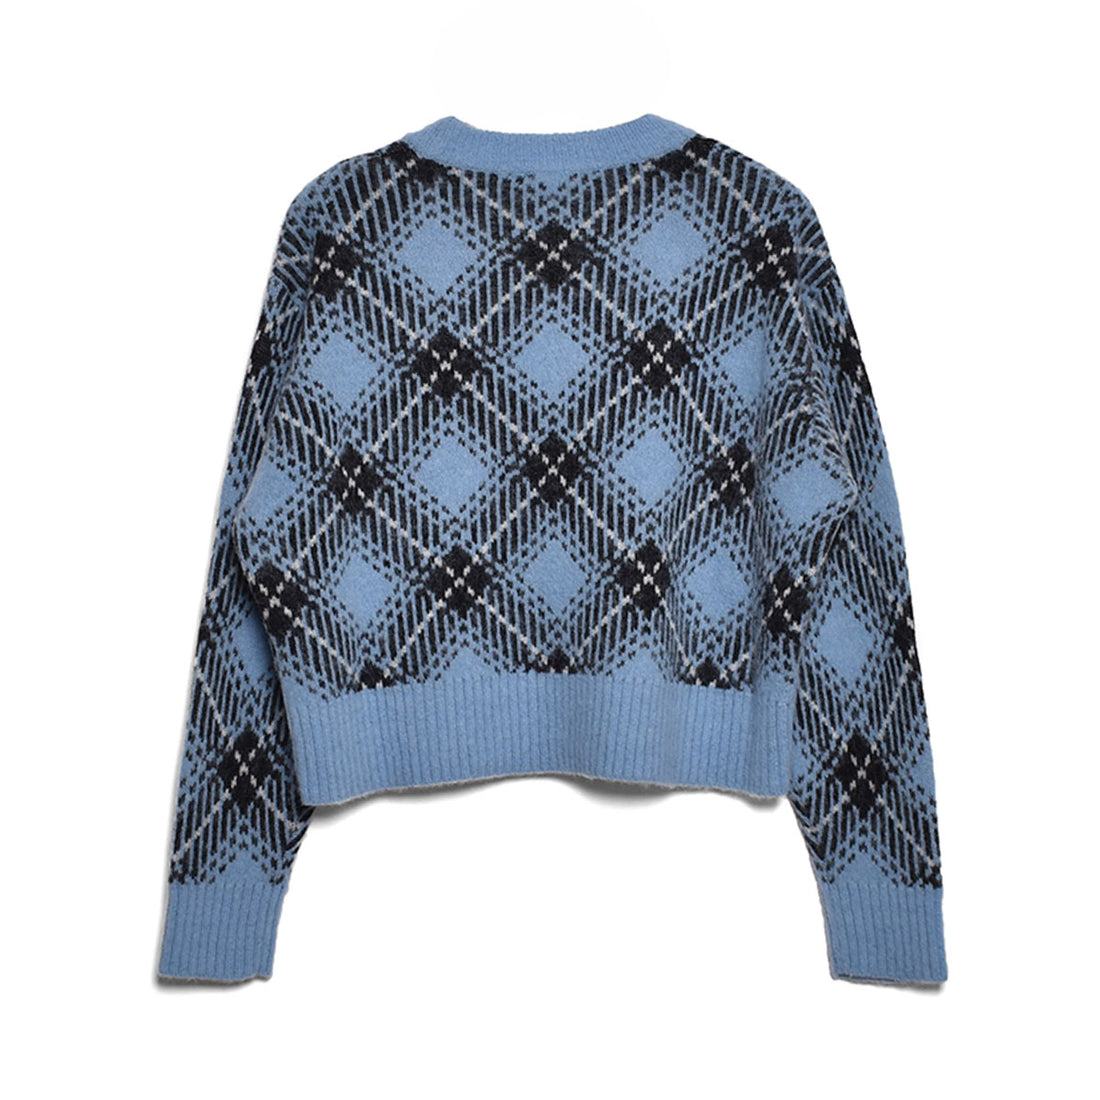 [GANNI]Check Wool Oversized Pullover/LIGHT BLUE(K2034)